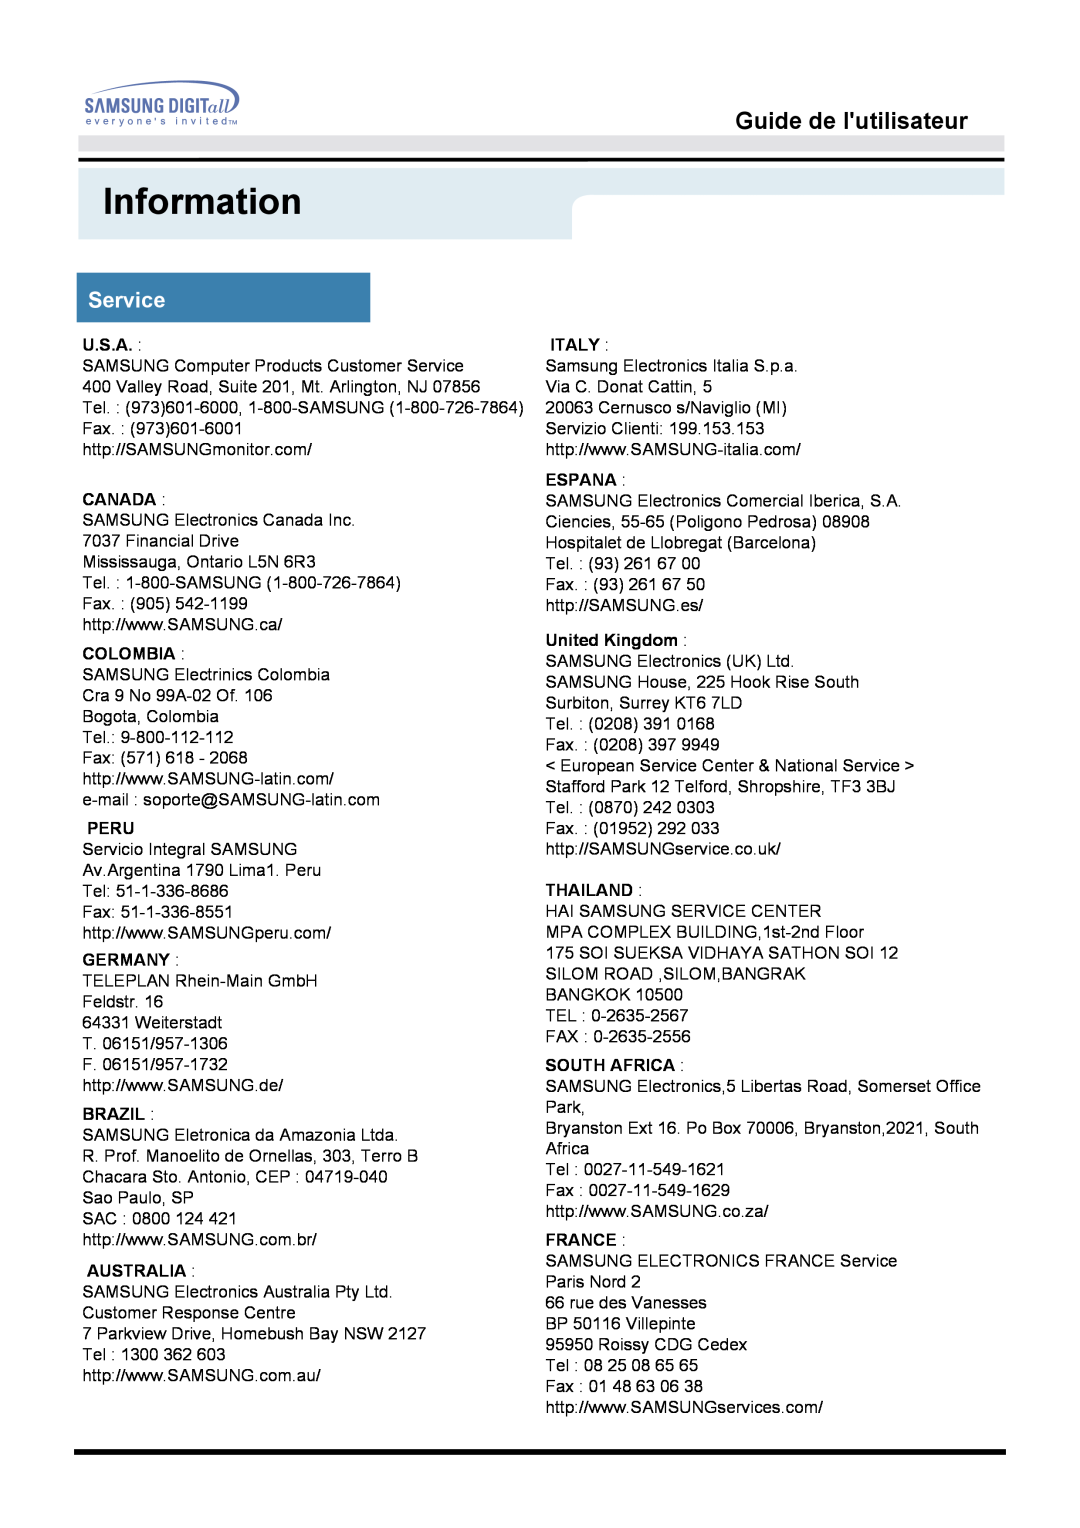 Samsung GG15MSSS/EDC Information, Service, Guide de lutilisateur, U.S.A, Canada, Colombia, Peru, Germany, Brazil, Italy 